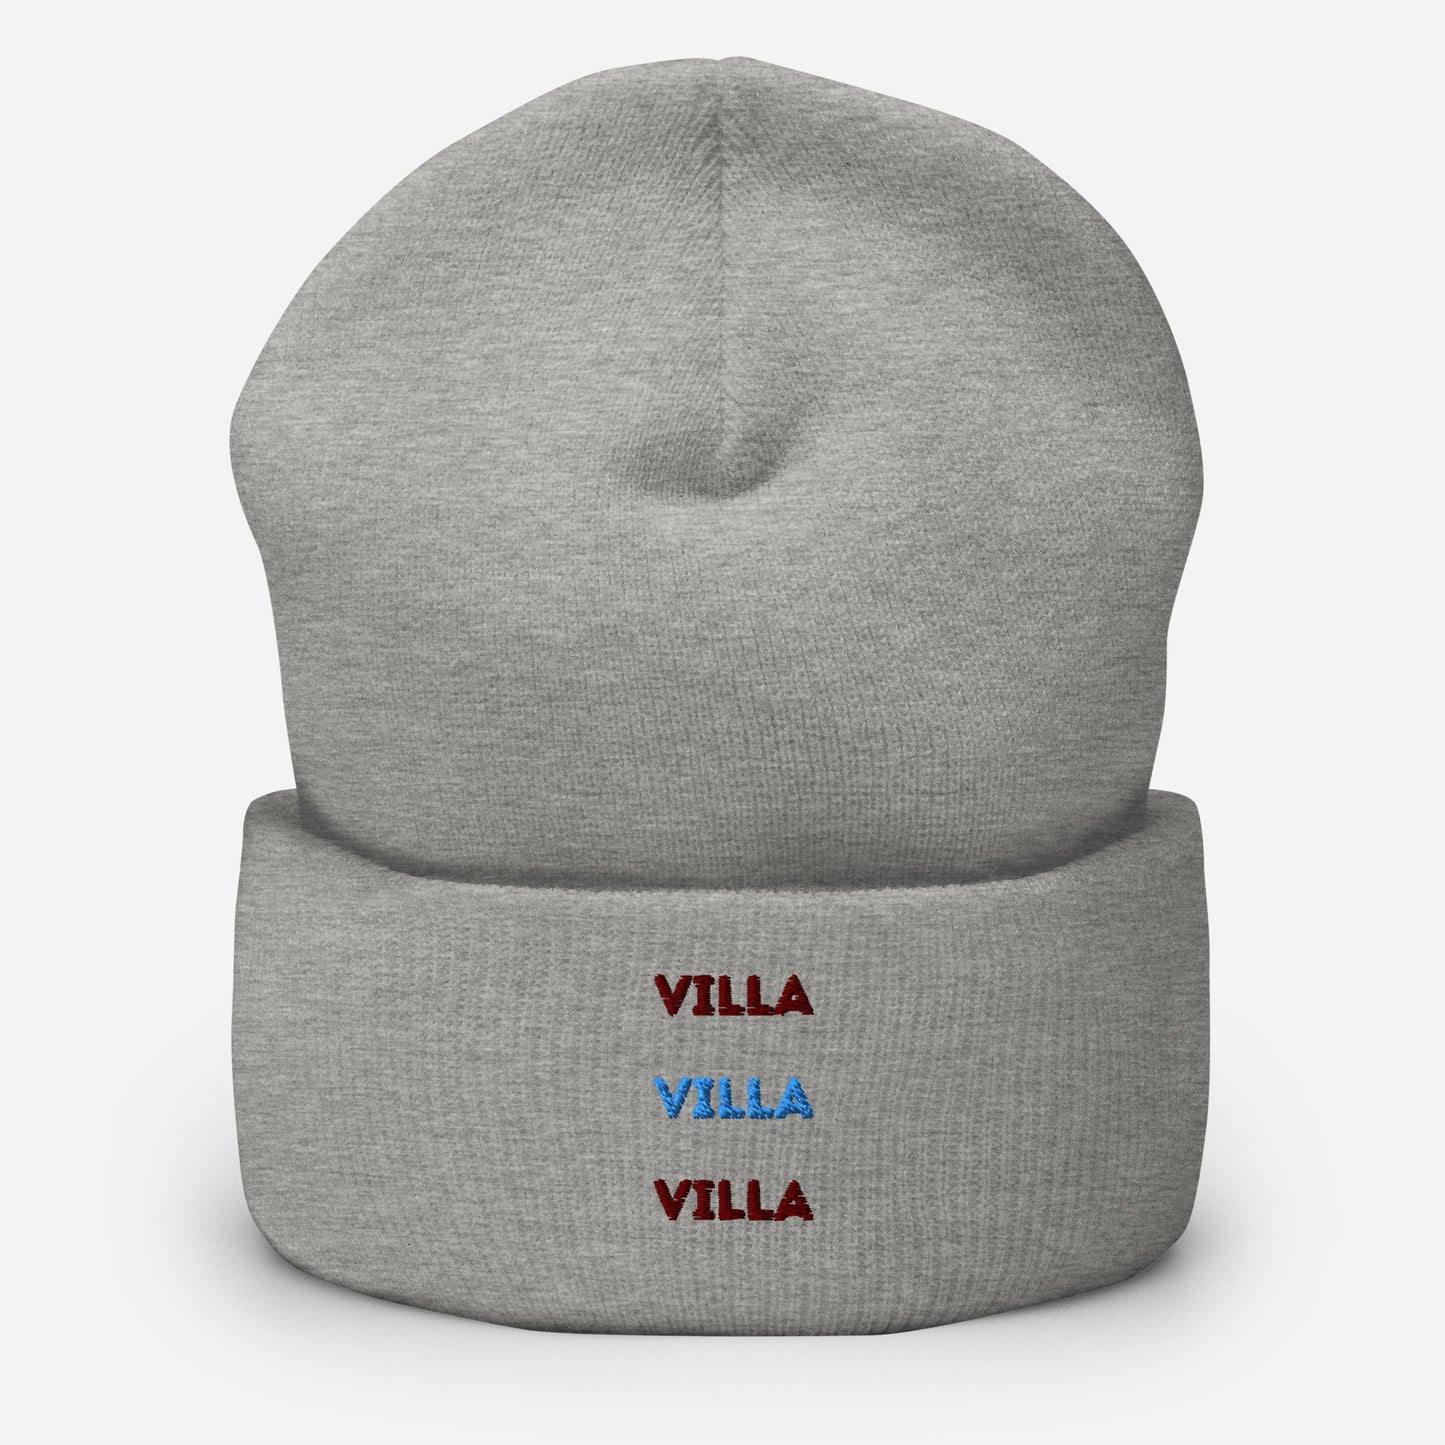 Villa Villa Villa Cuffed Beanie Hat